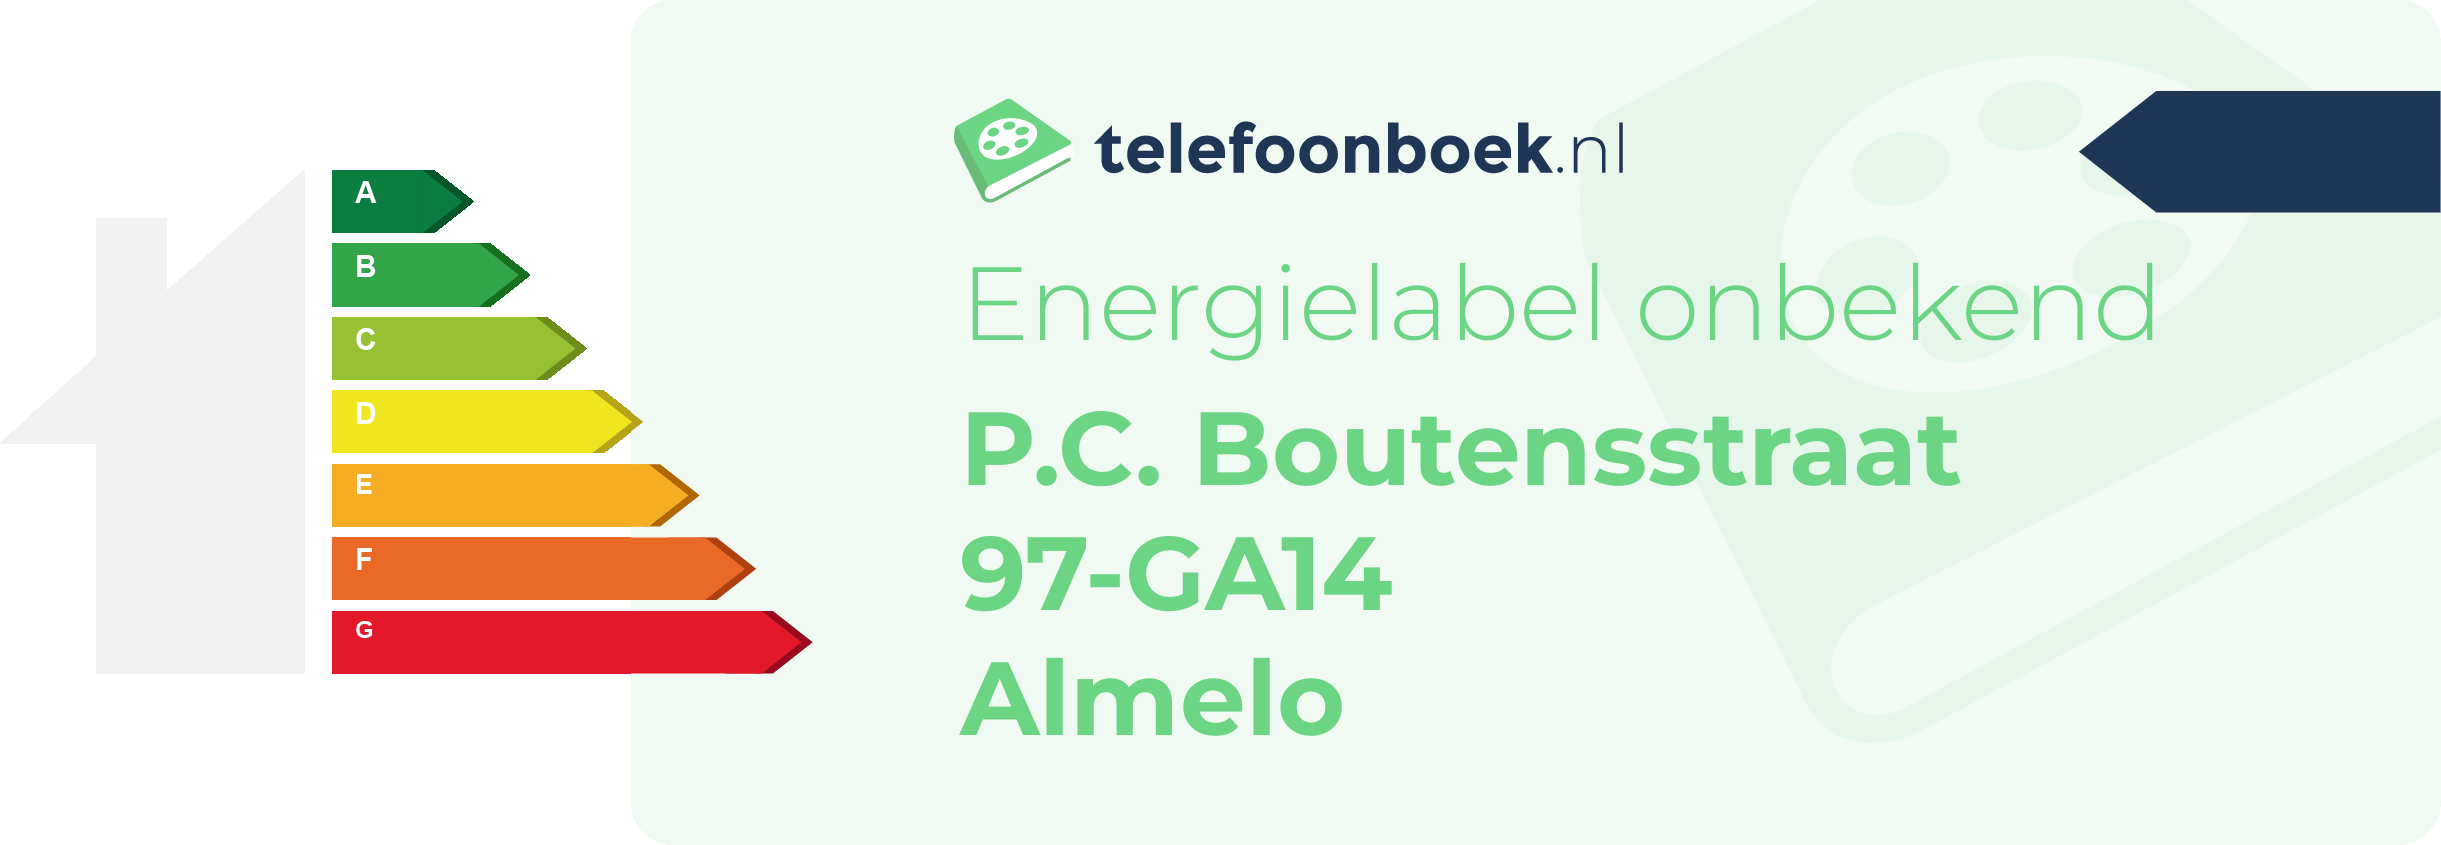 Energielabel P.C. Boutensstraat 97-GA14 Almelo